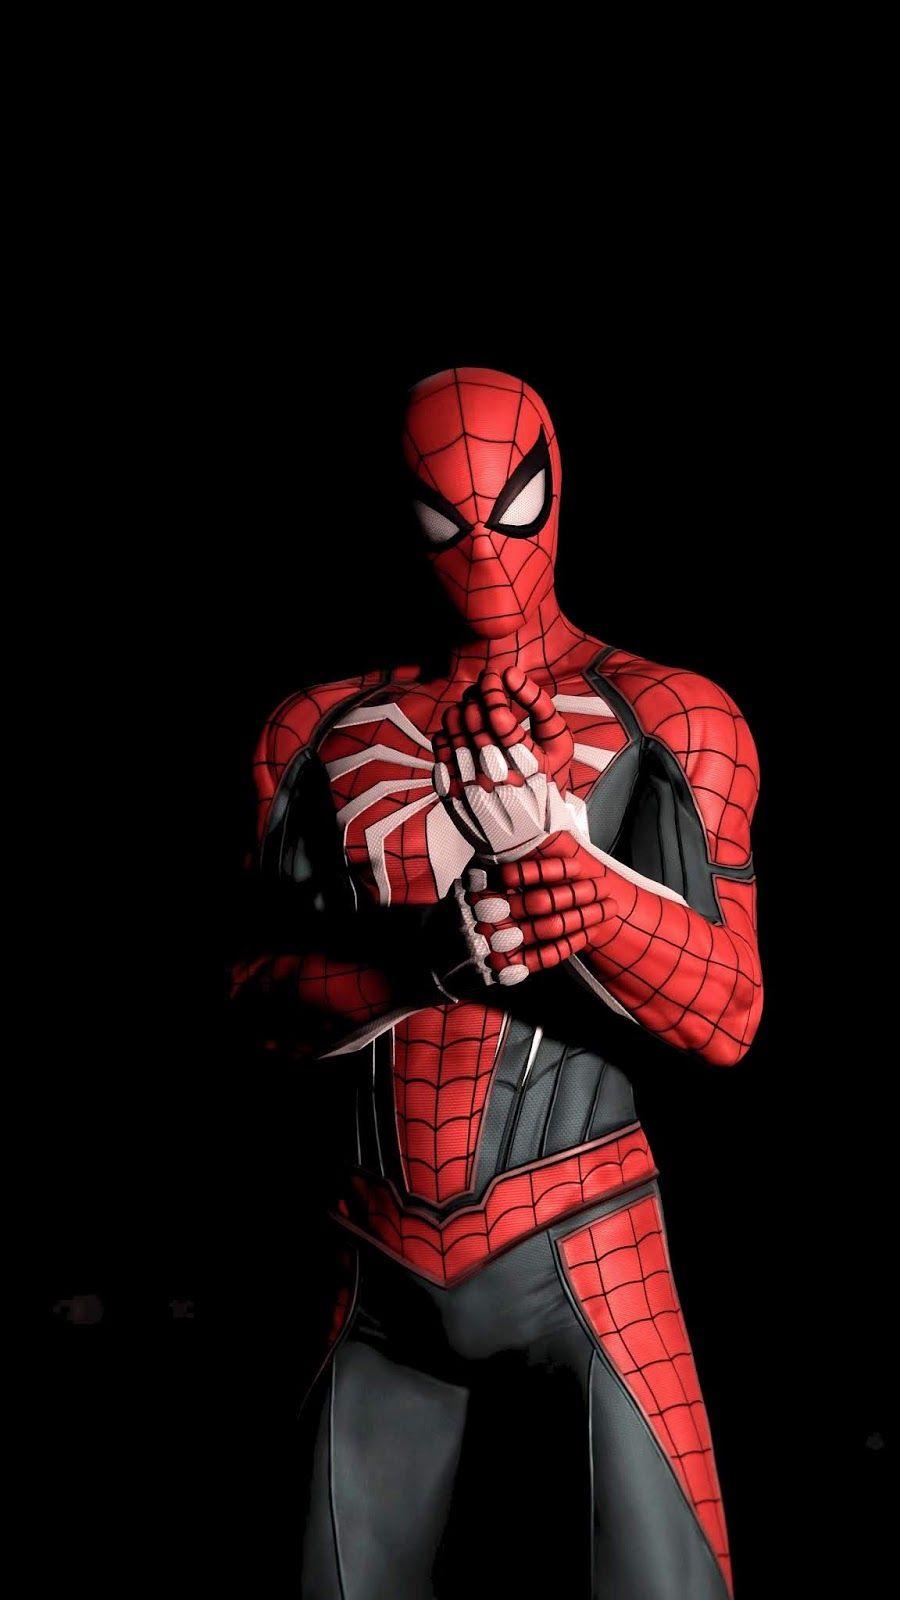 Spiderman AMOLED #wallpaper #iphone #android #background #followme. Spiderman, Marvel spiderman, Amazing spiderman